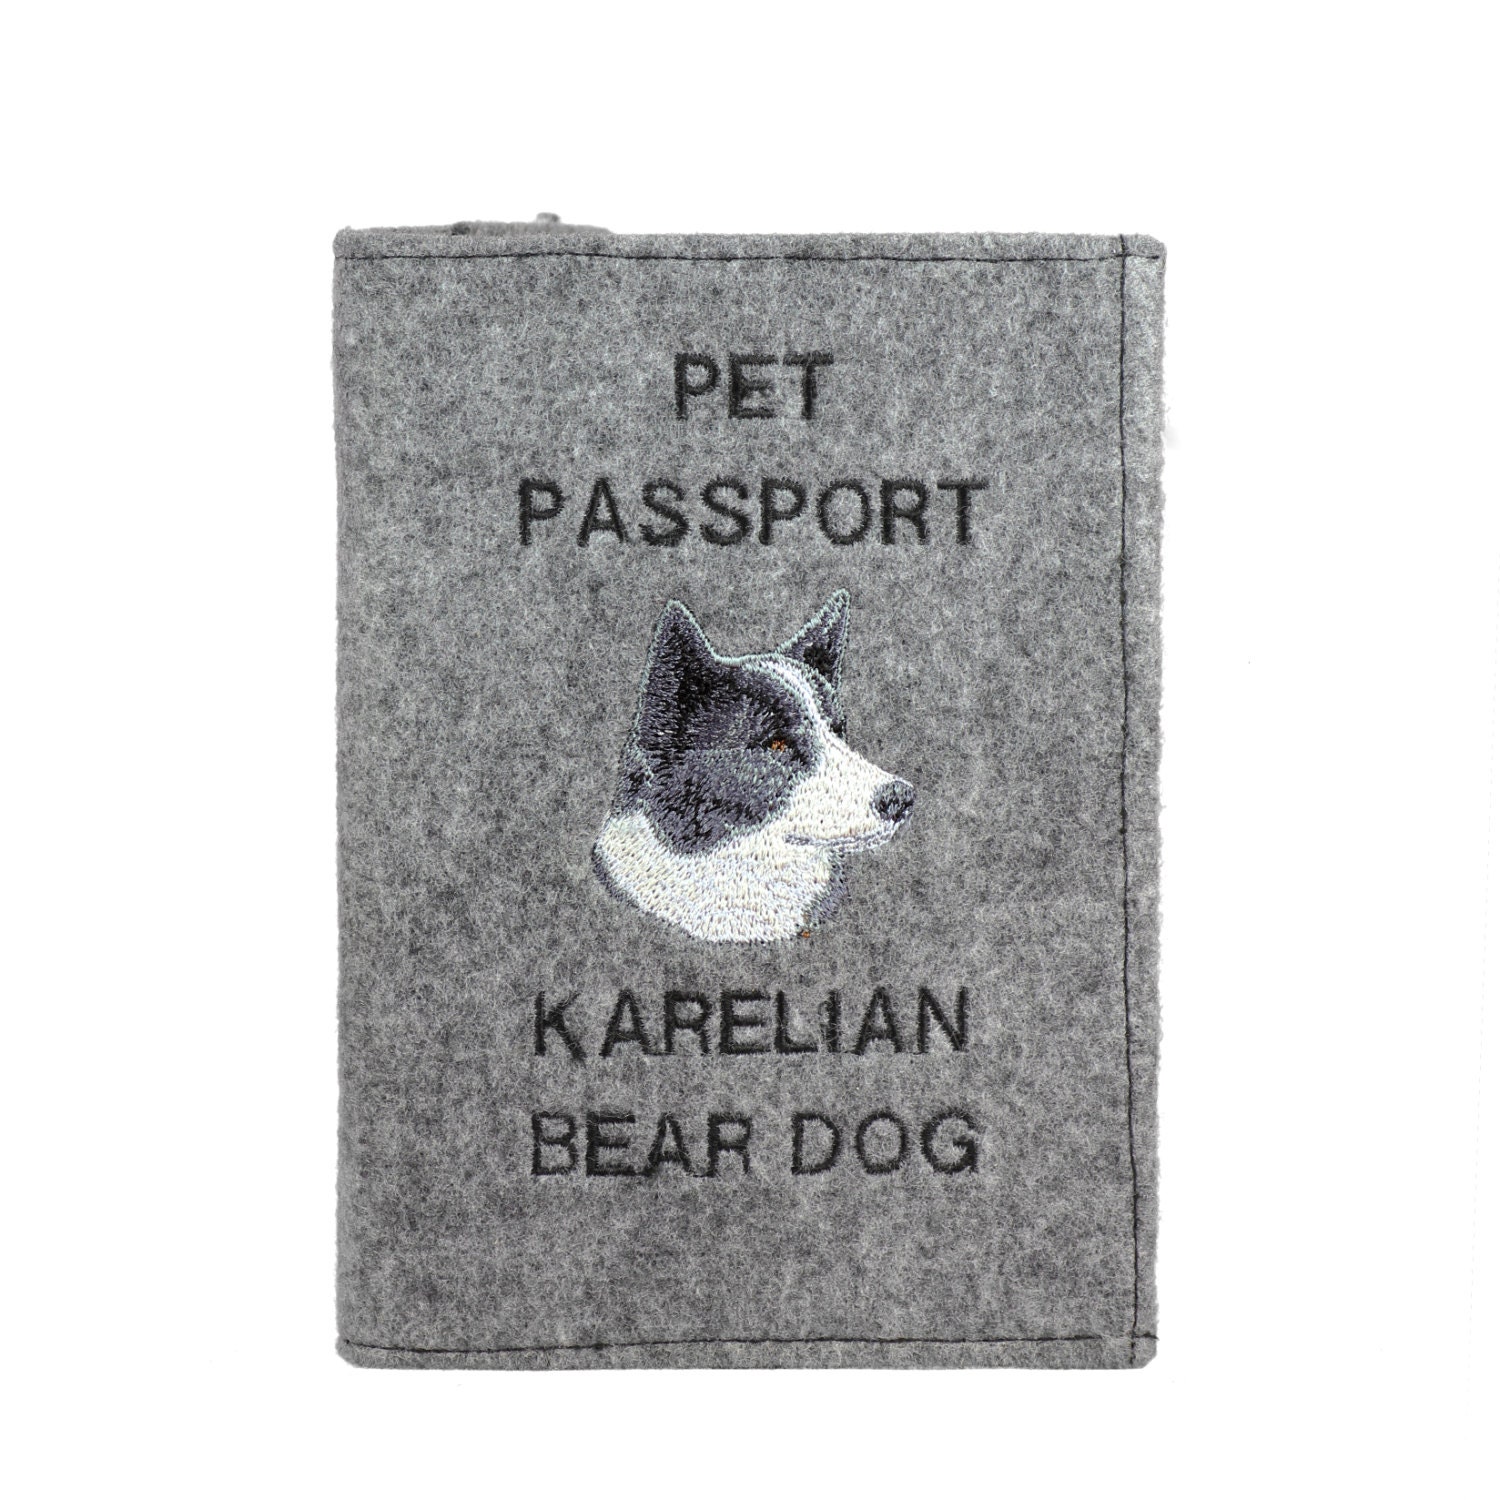 dog owner accessory Embroidered felt document cover Traveler’s gift Dog passport wallet Karelian Bear Dog Passport Holder Bags & Purses Luggage & Travel Passport Covers 